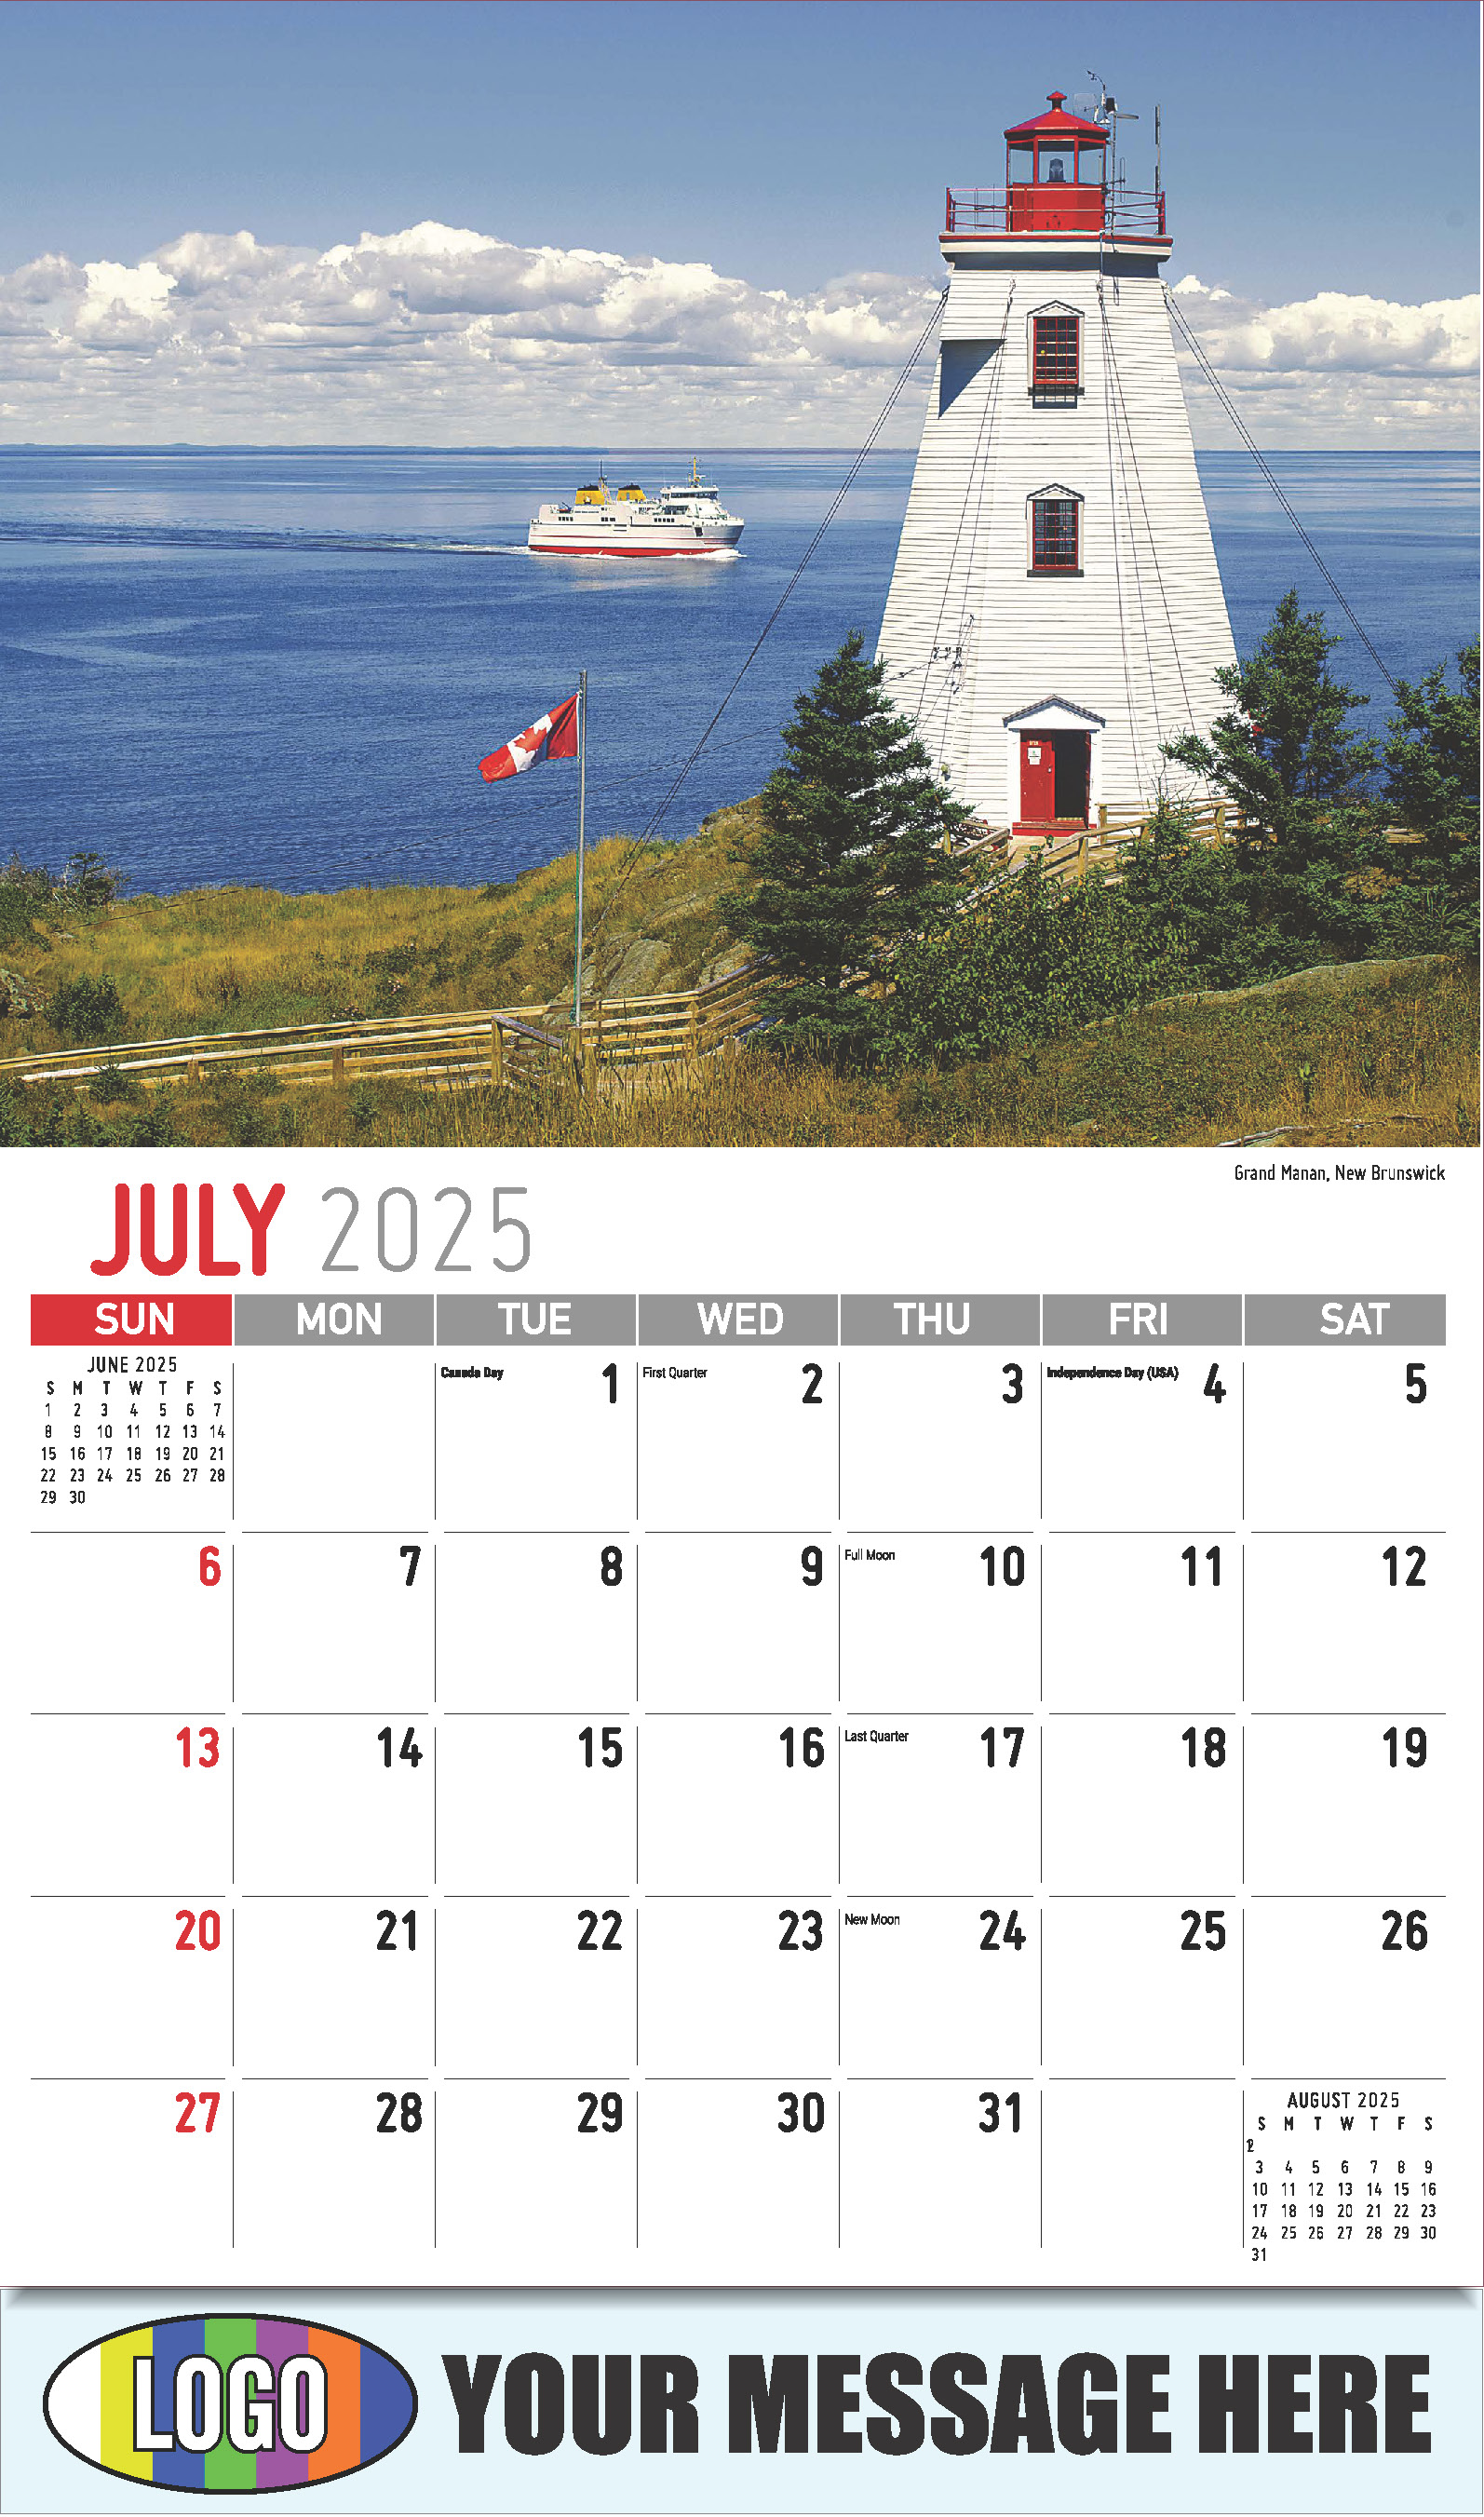 Atlantic Canada Scenic 2025 Business Promotion Calendar - July